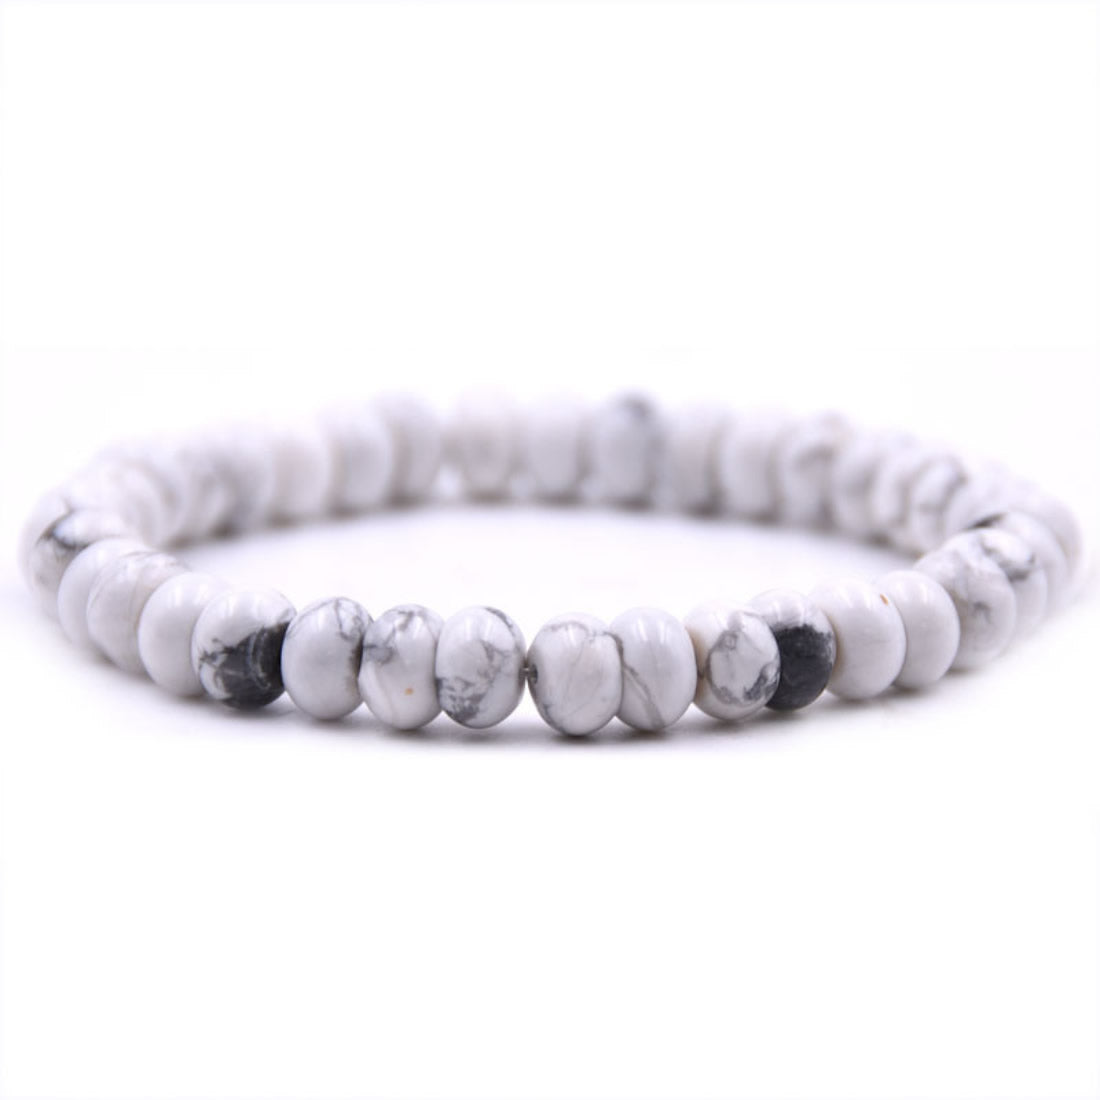 White Turquoise Gemstone Bracelet - Oval Beads - 7.5 inches